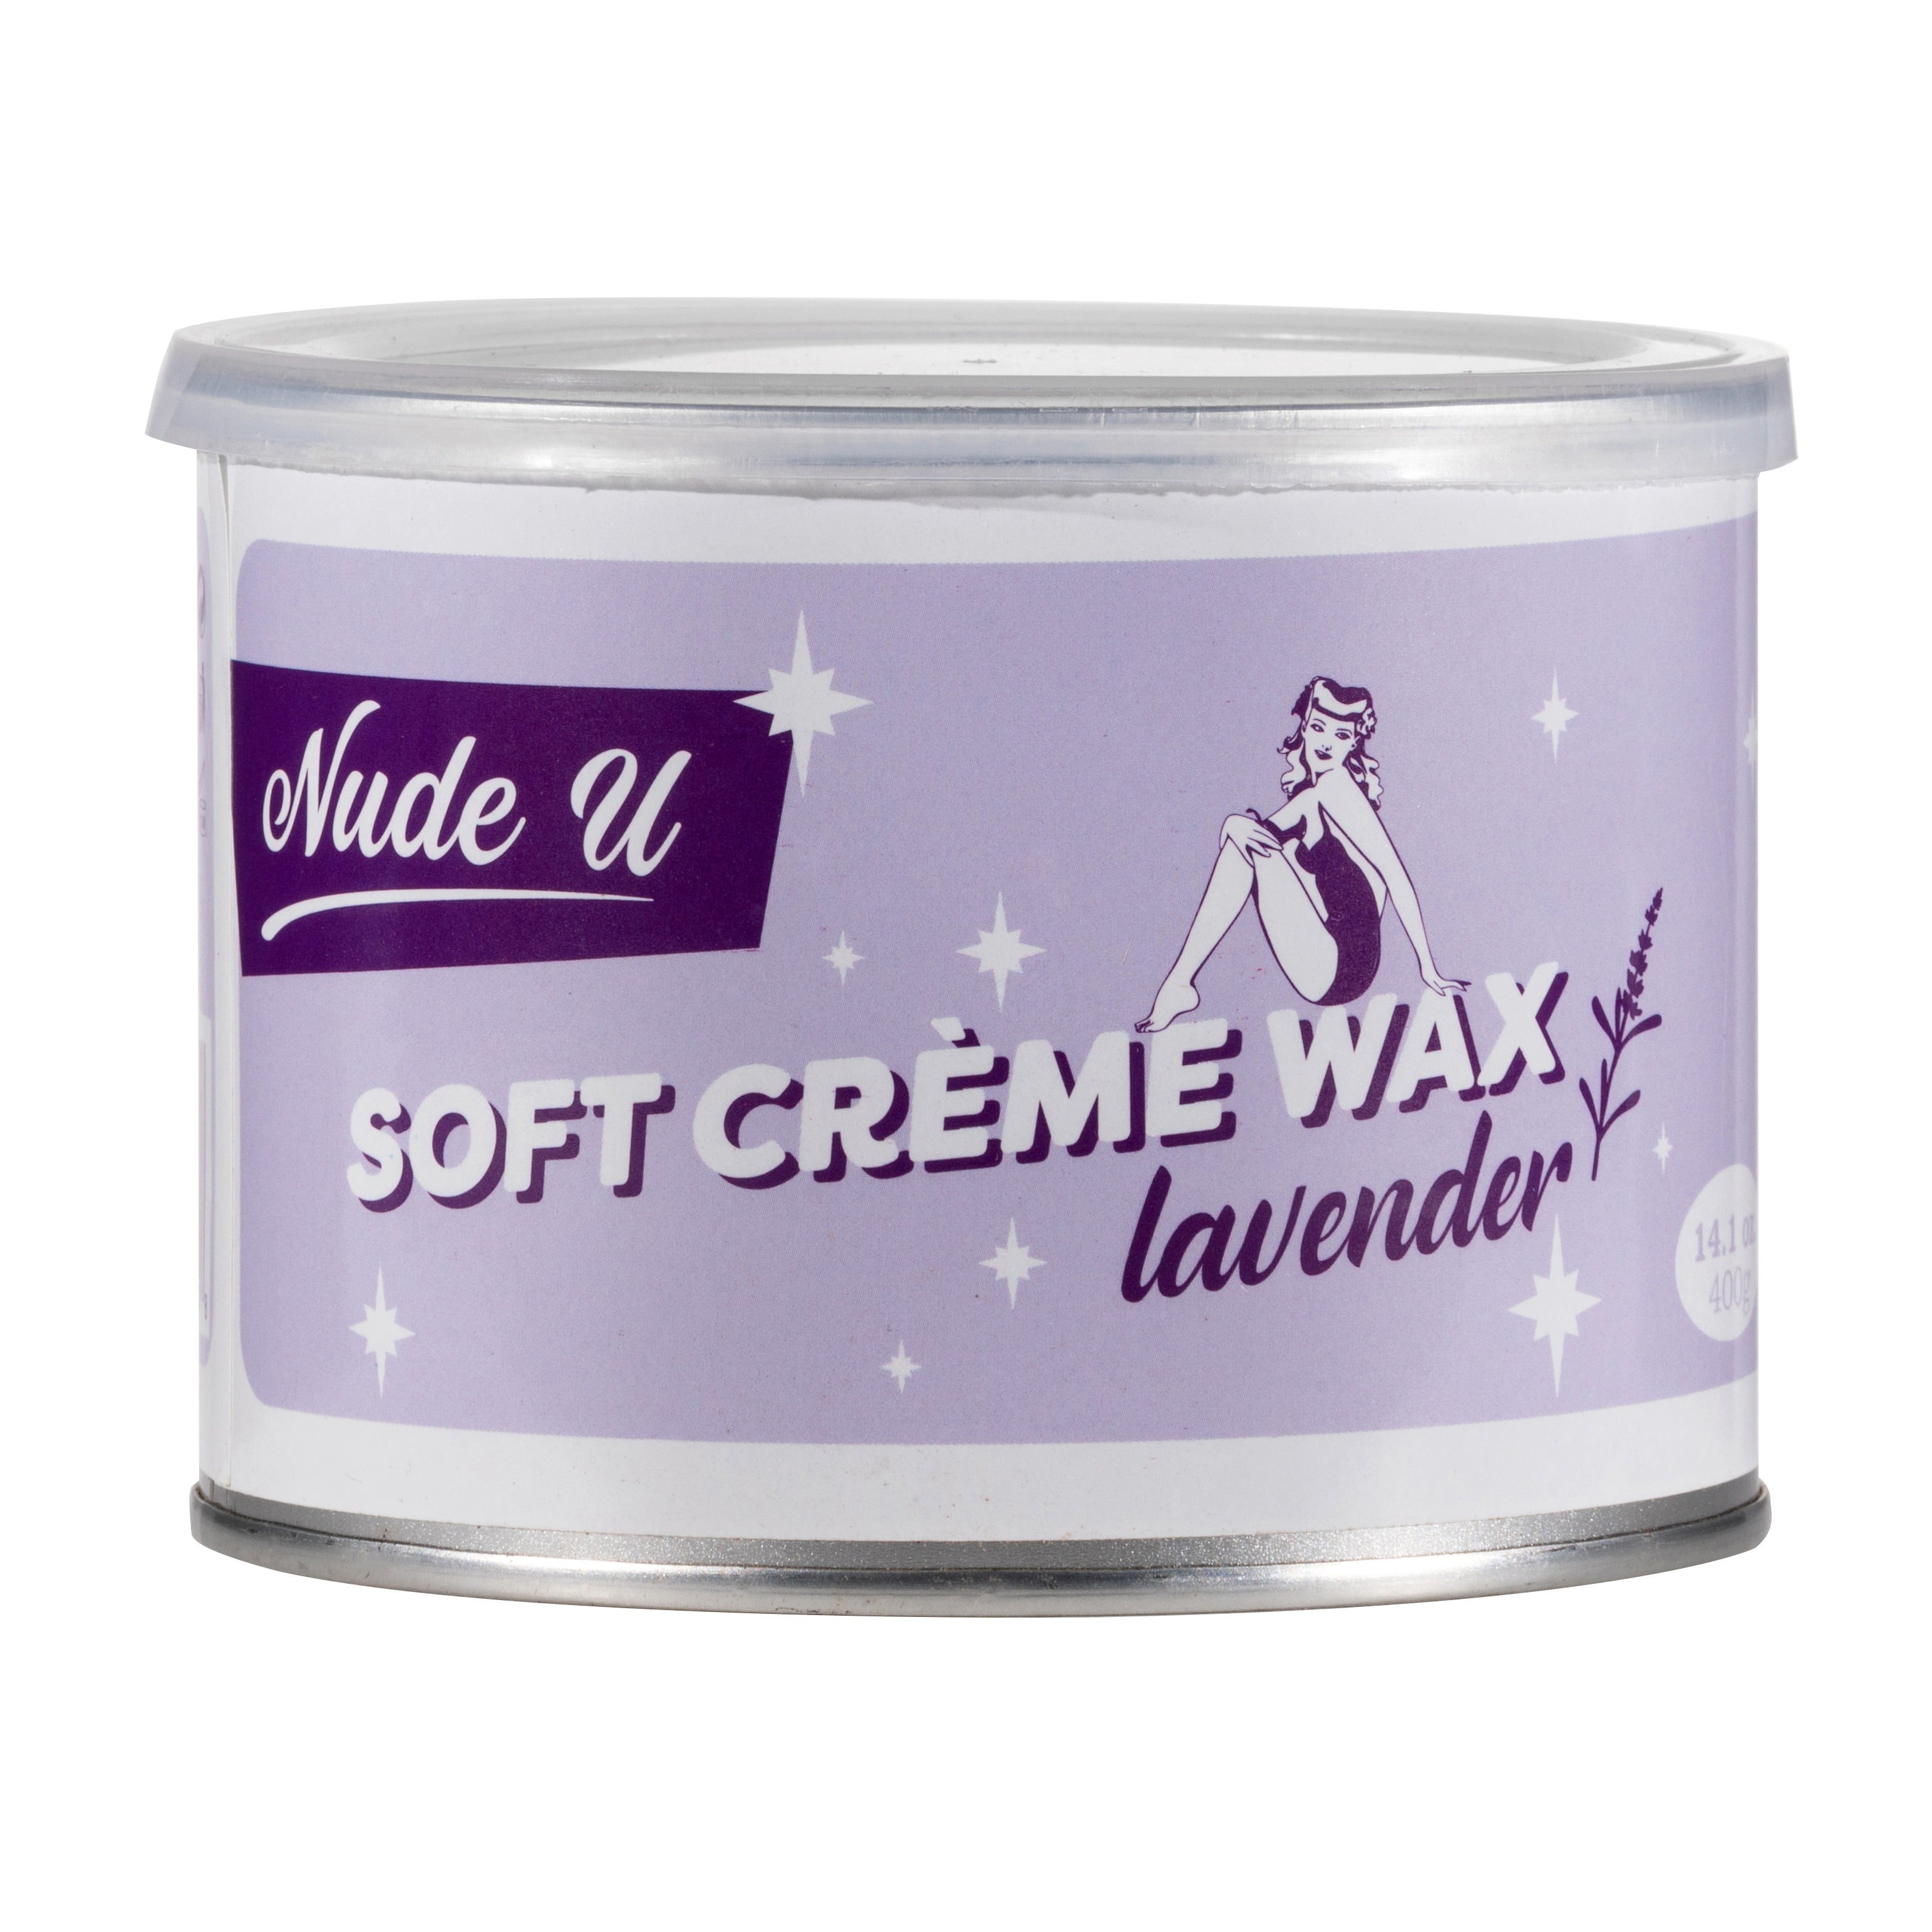 Lavender soft creme wax